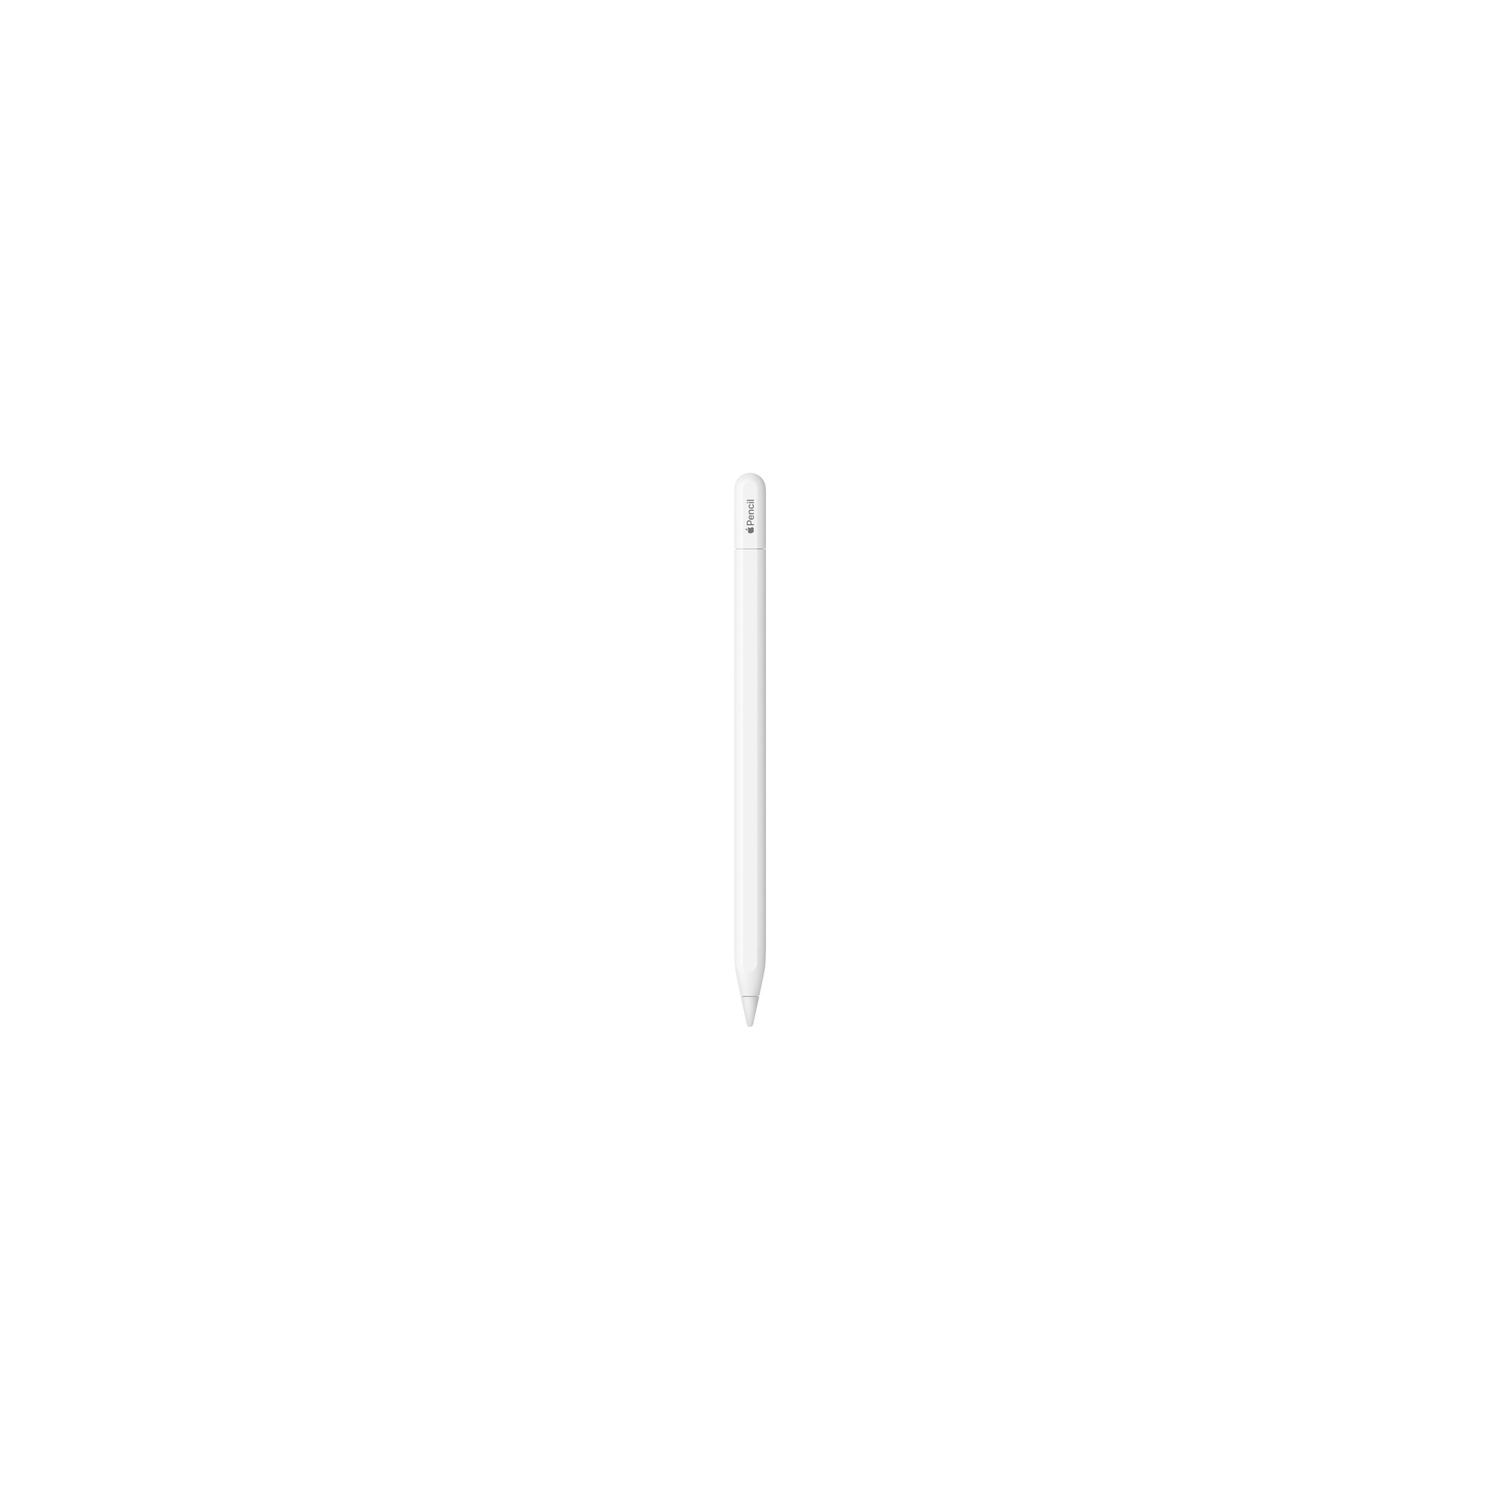 Apple Pencil (USB-C) (3rd Generation) for iPad - White - Open Box